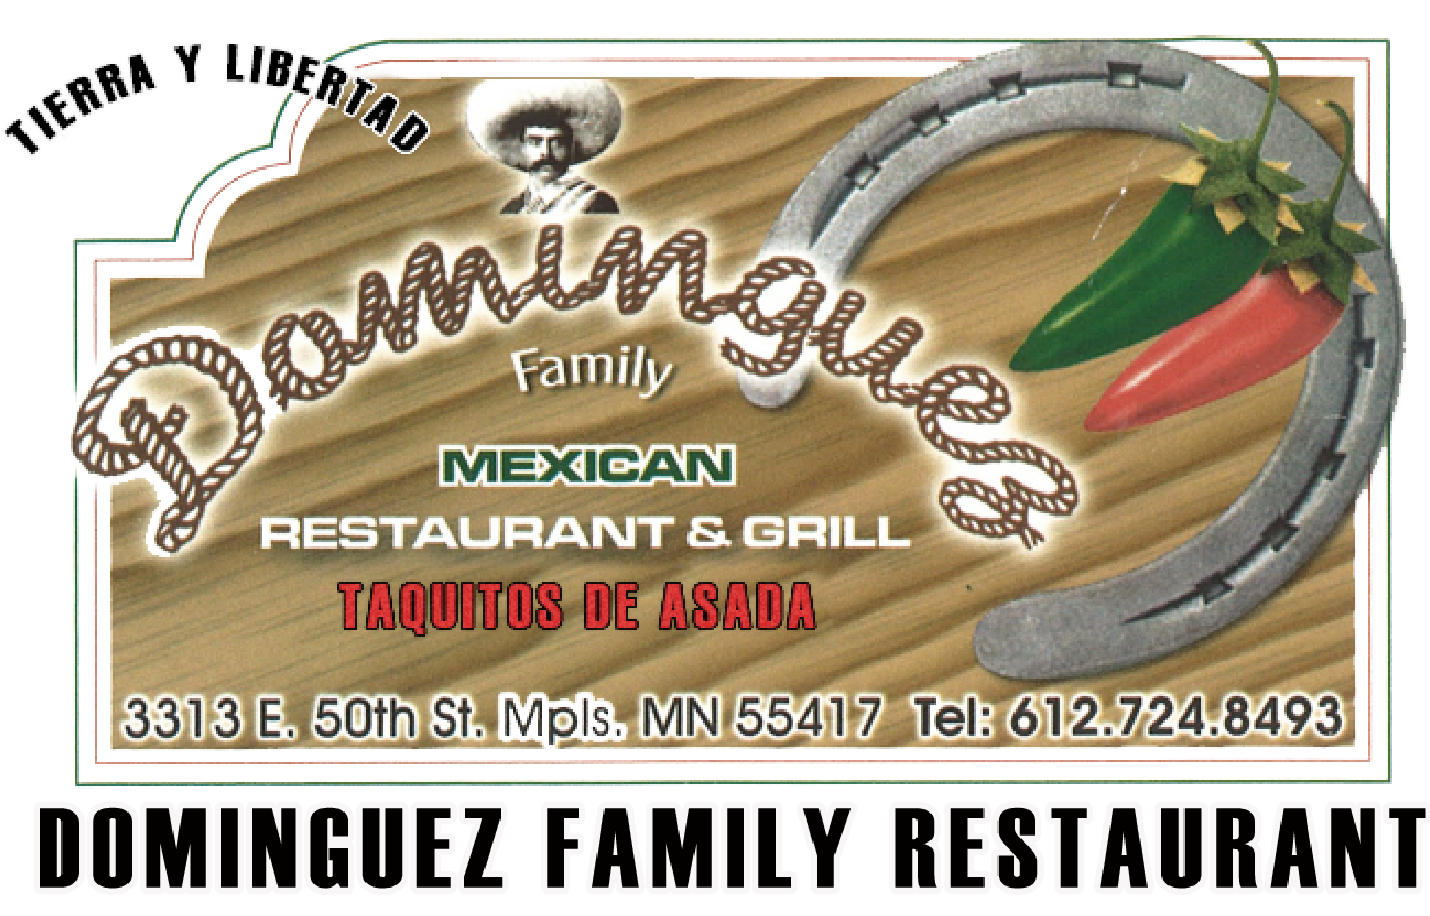 Dominguez Family Restaurant